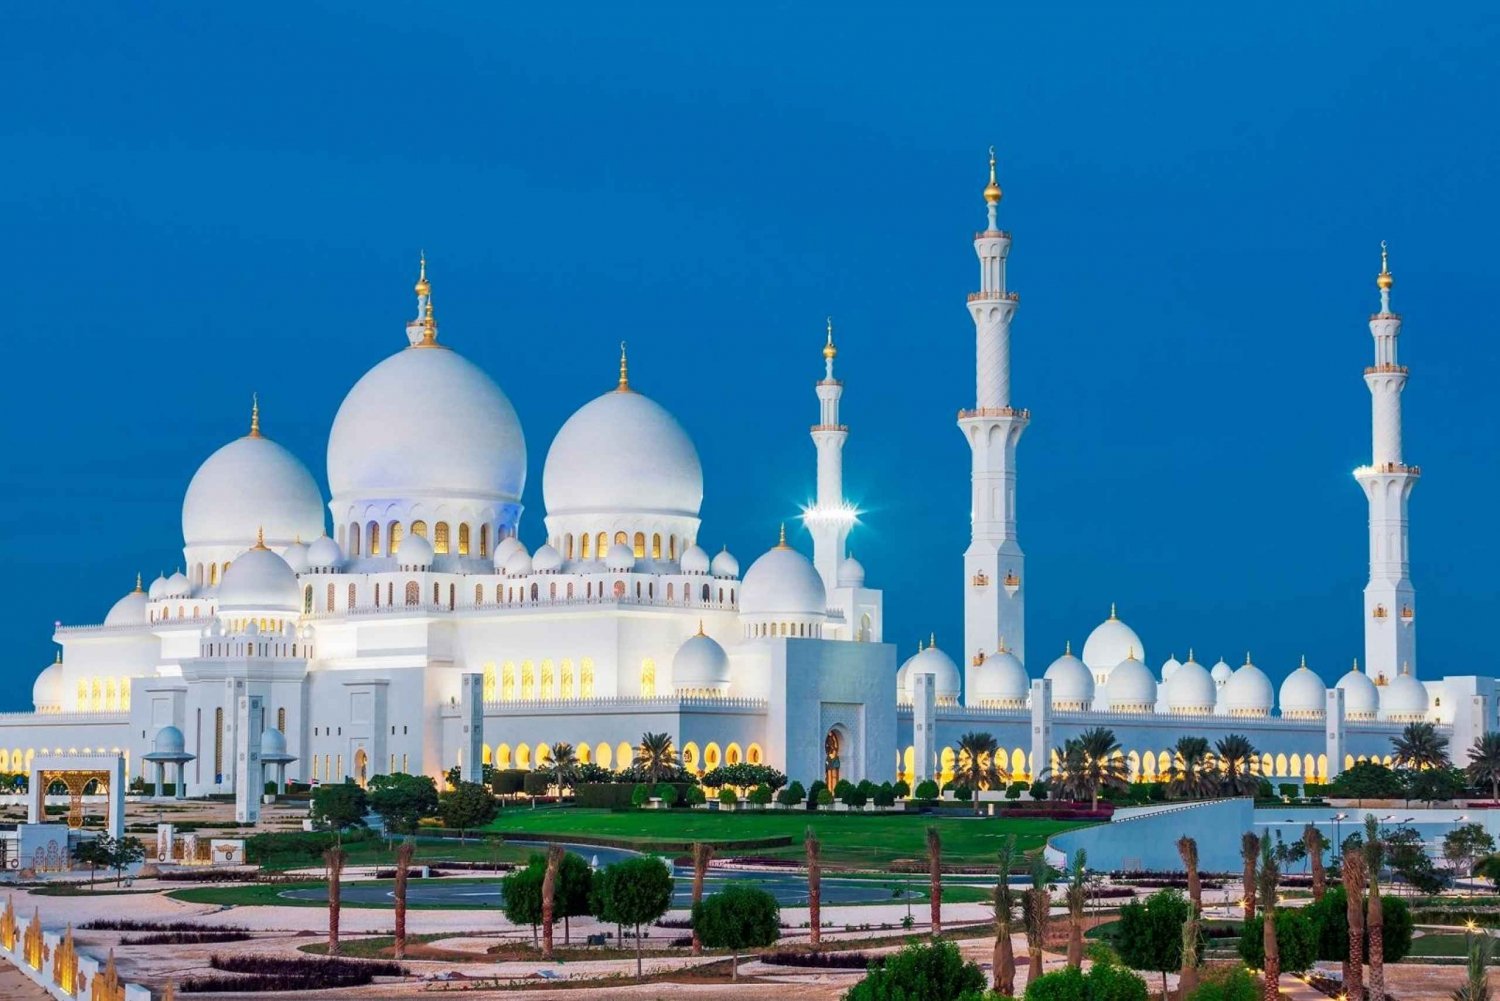 Abu Dhabi: Dagvullende tour met gids op ontdekkingsreis